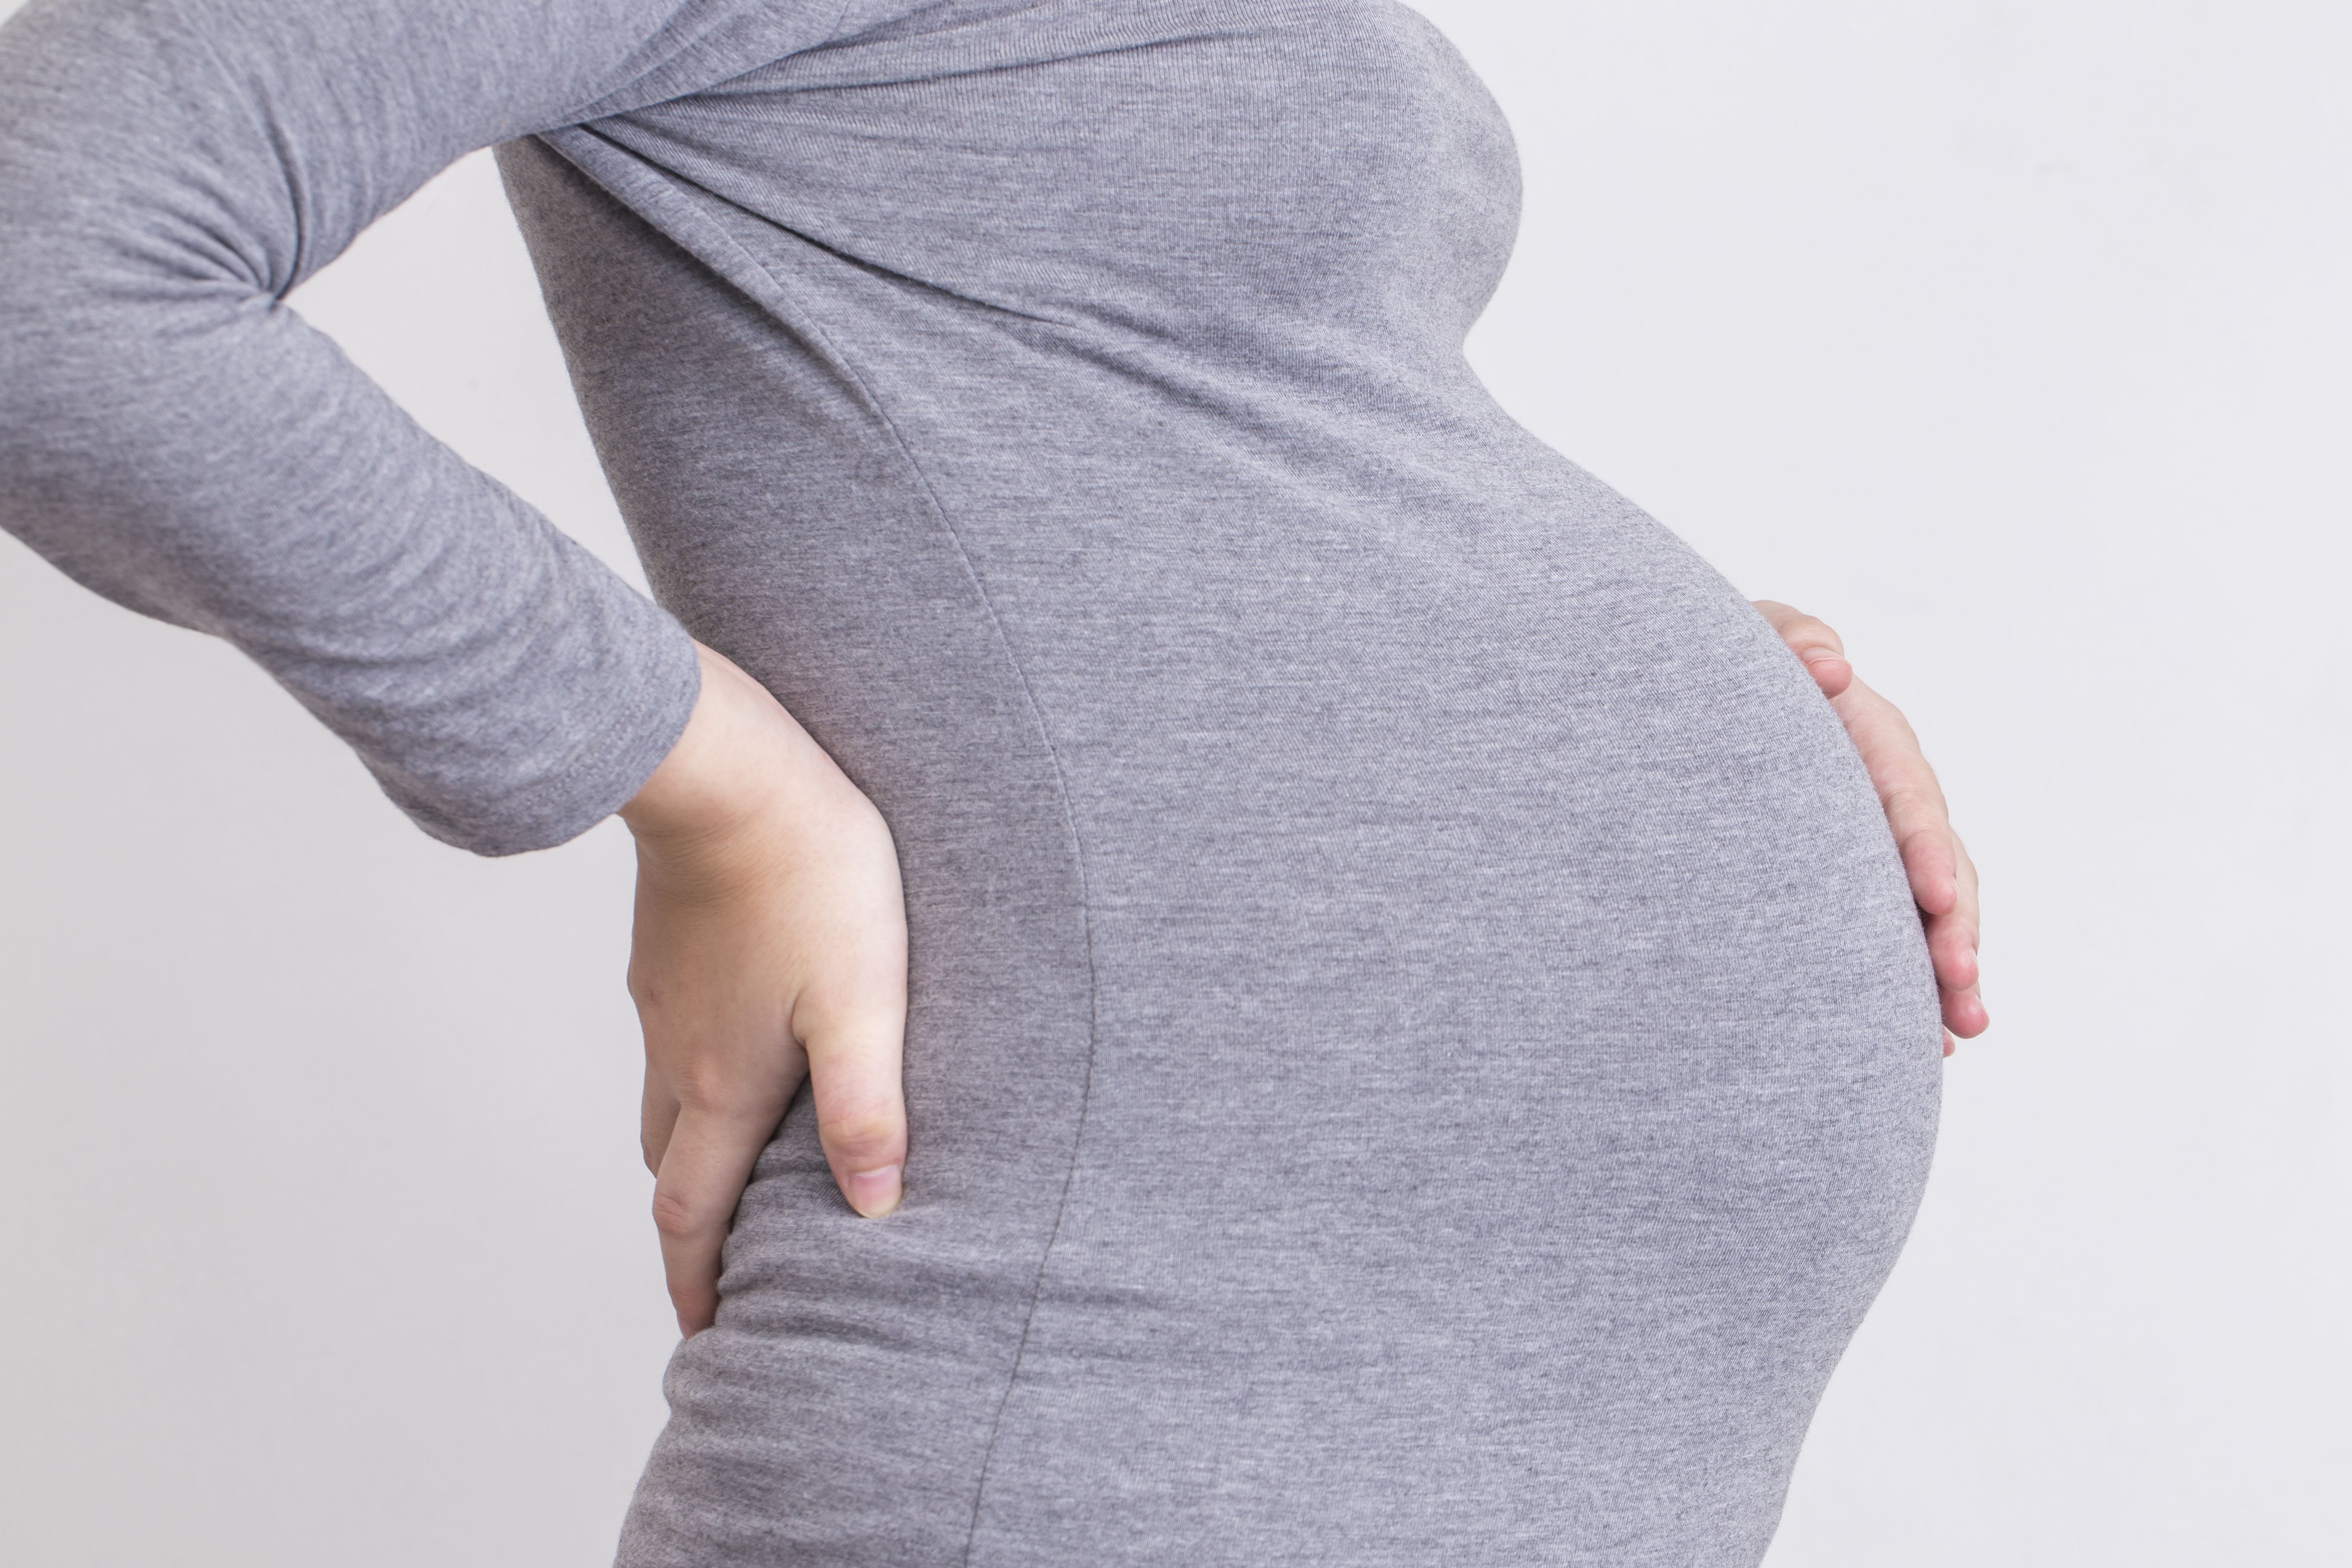 Болит живот и спина при беременности